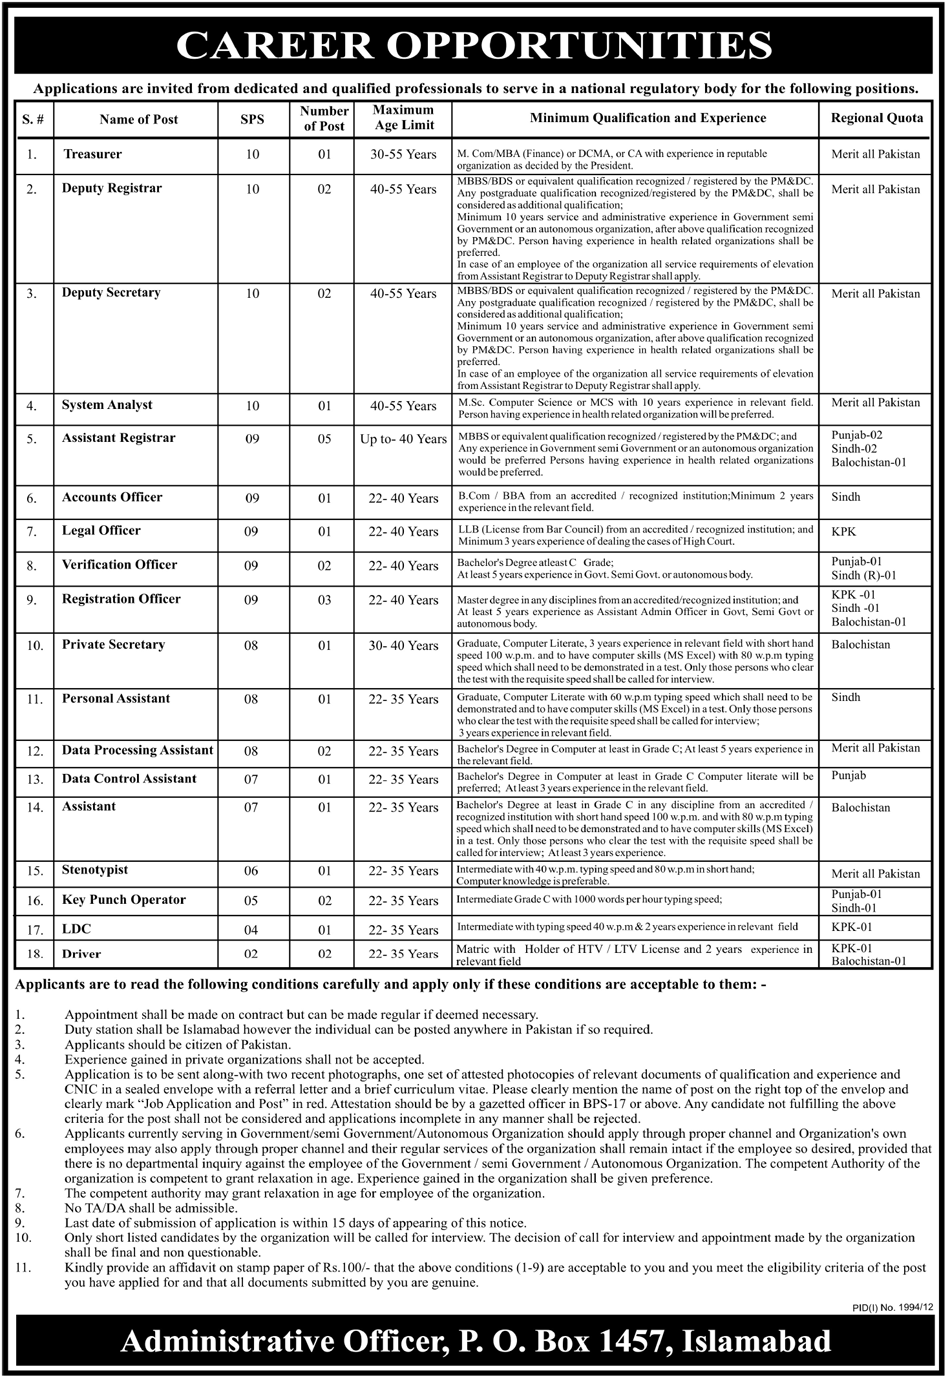 PO Box 1457 Islamabad Jobs in a National Regulatory Body